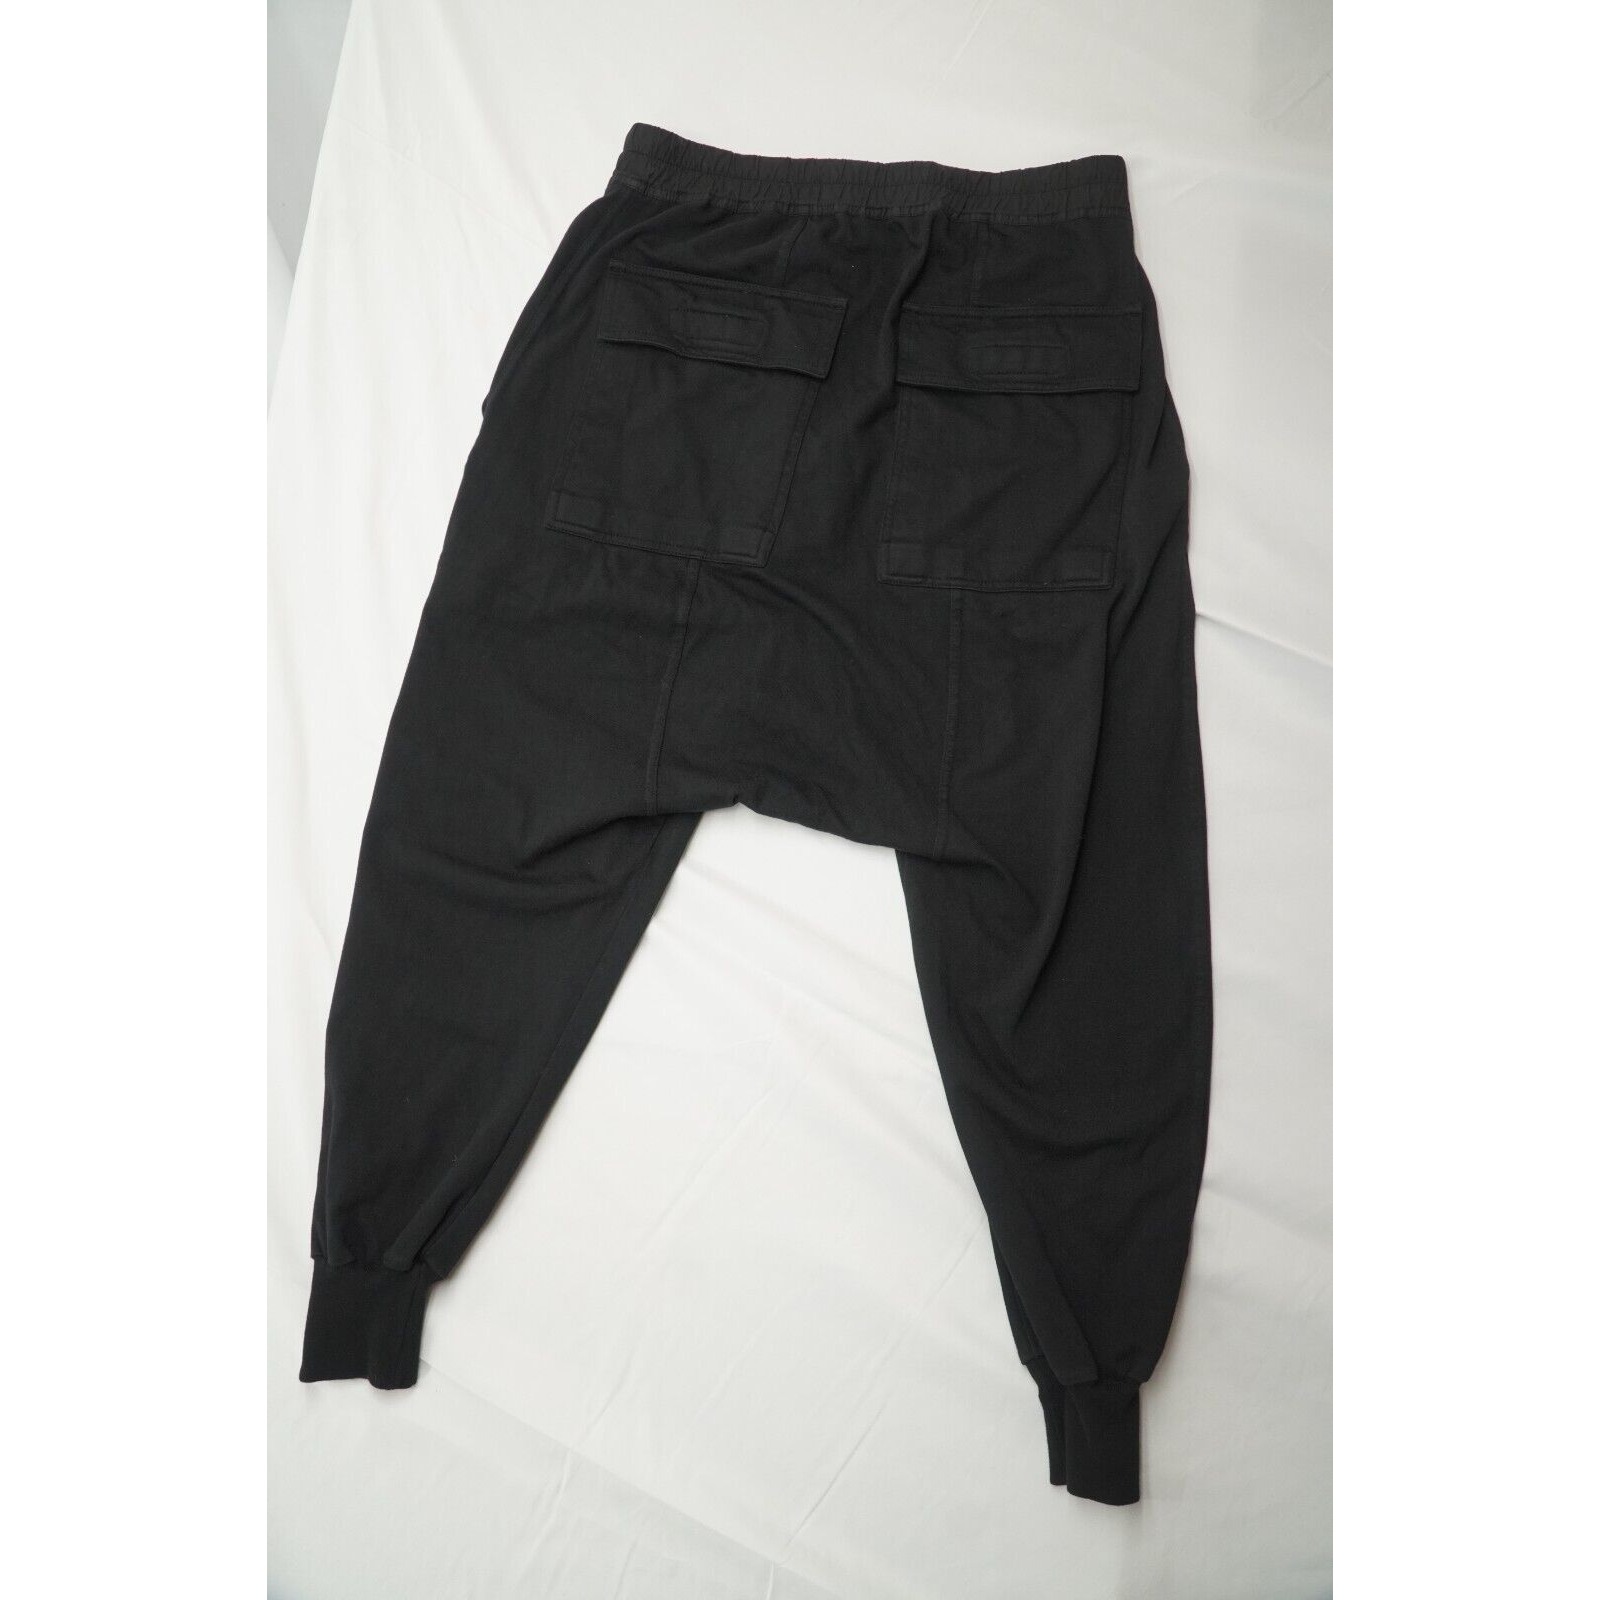 Rick Prisoner Black Pants Drop Crotch SS20 - M - 10